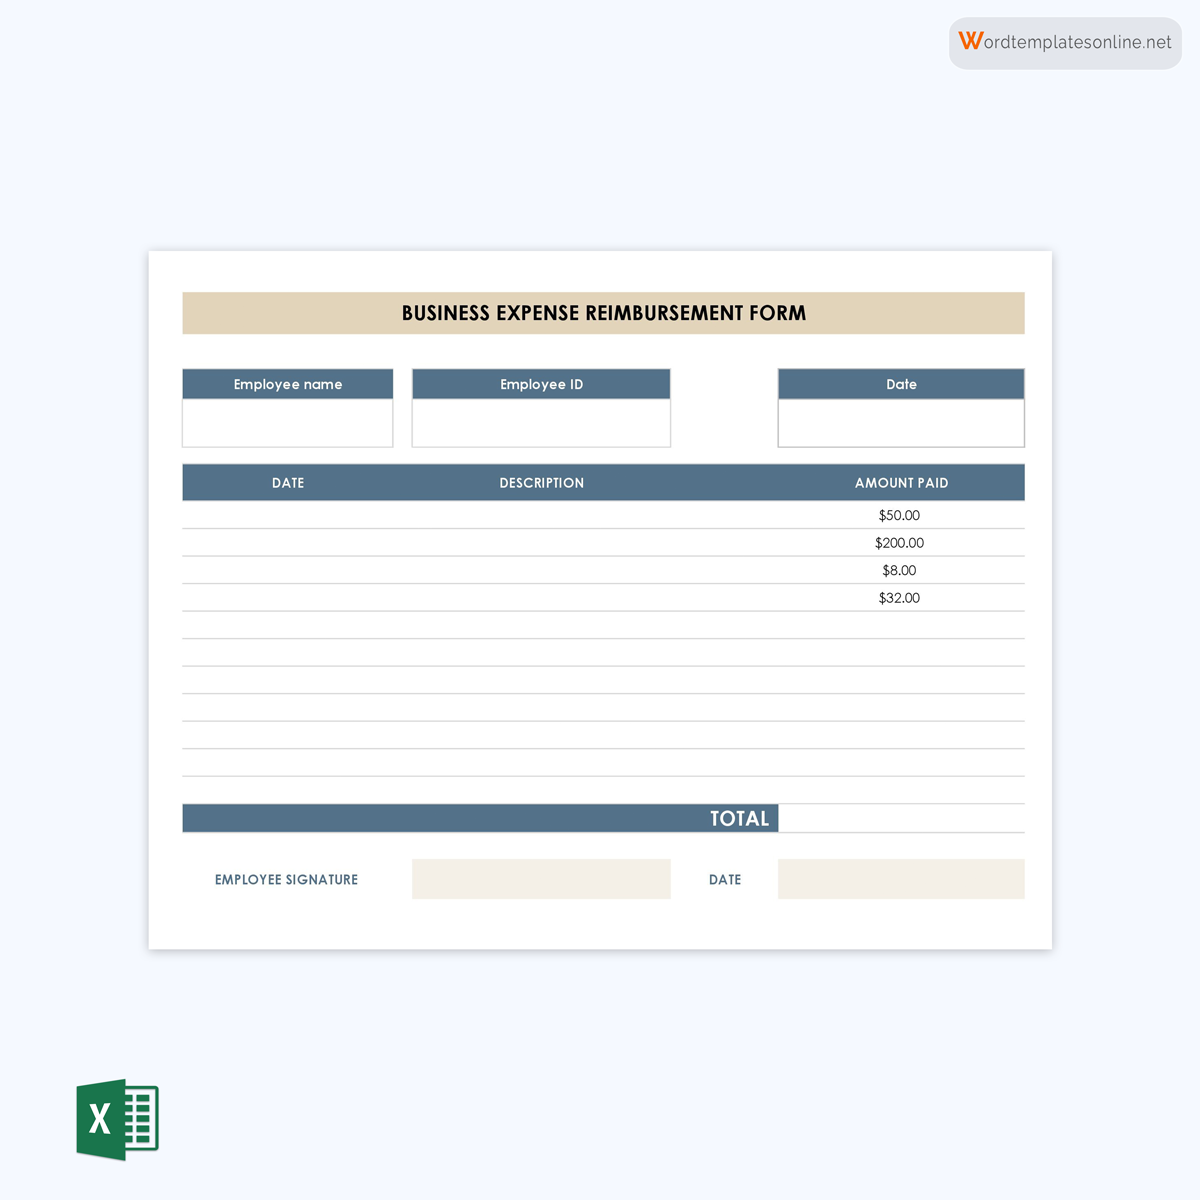 Free Downloadable Business Expense Reimbursement Form as Excel Sheet